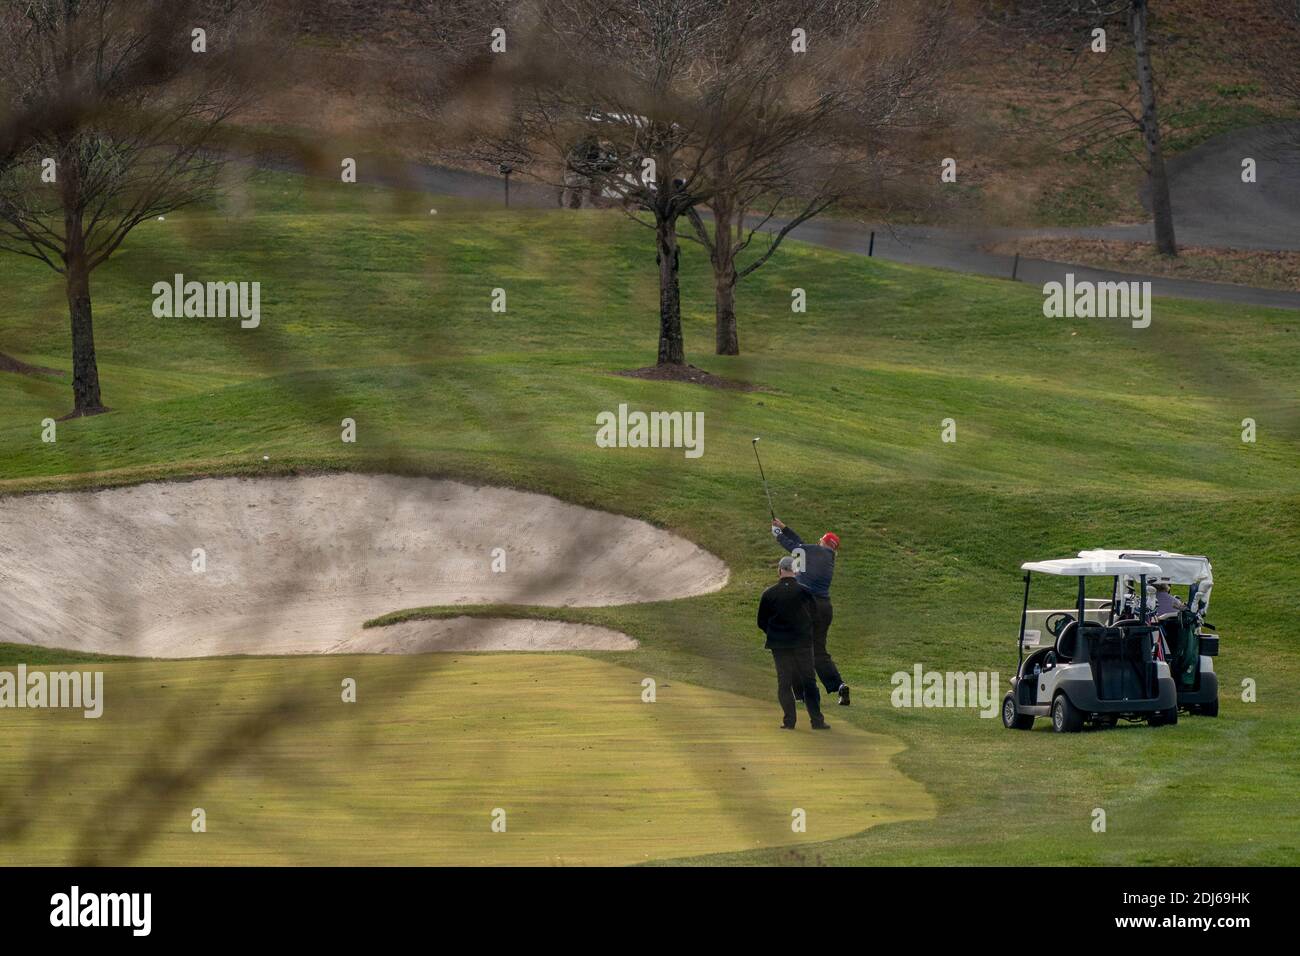 Washington, United States. 13th Dec, 2020. United States President Donald J. Trump plays golf at Trump National Golf Club in Sterling, Virginia on Sunday, December 13, 2020. Photo by Ken Cedeno/UPI Credit: UPI/Alamy Live News Stock Photo